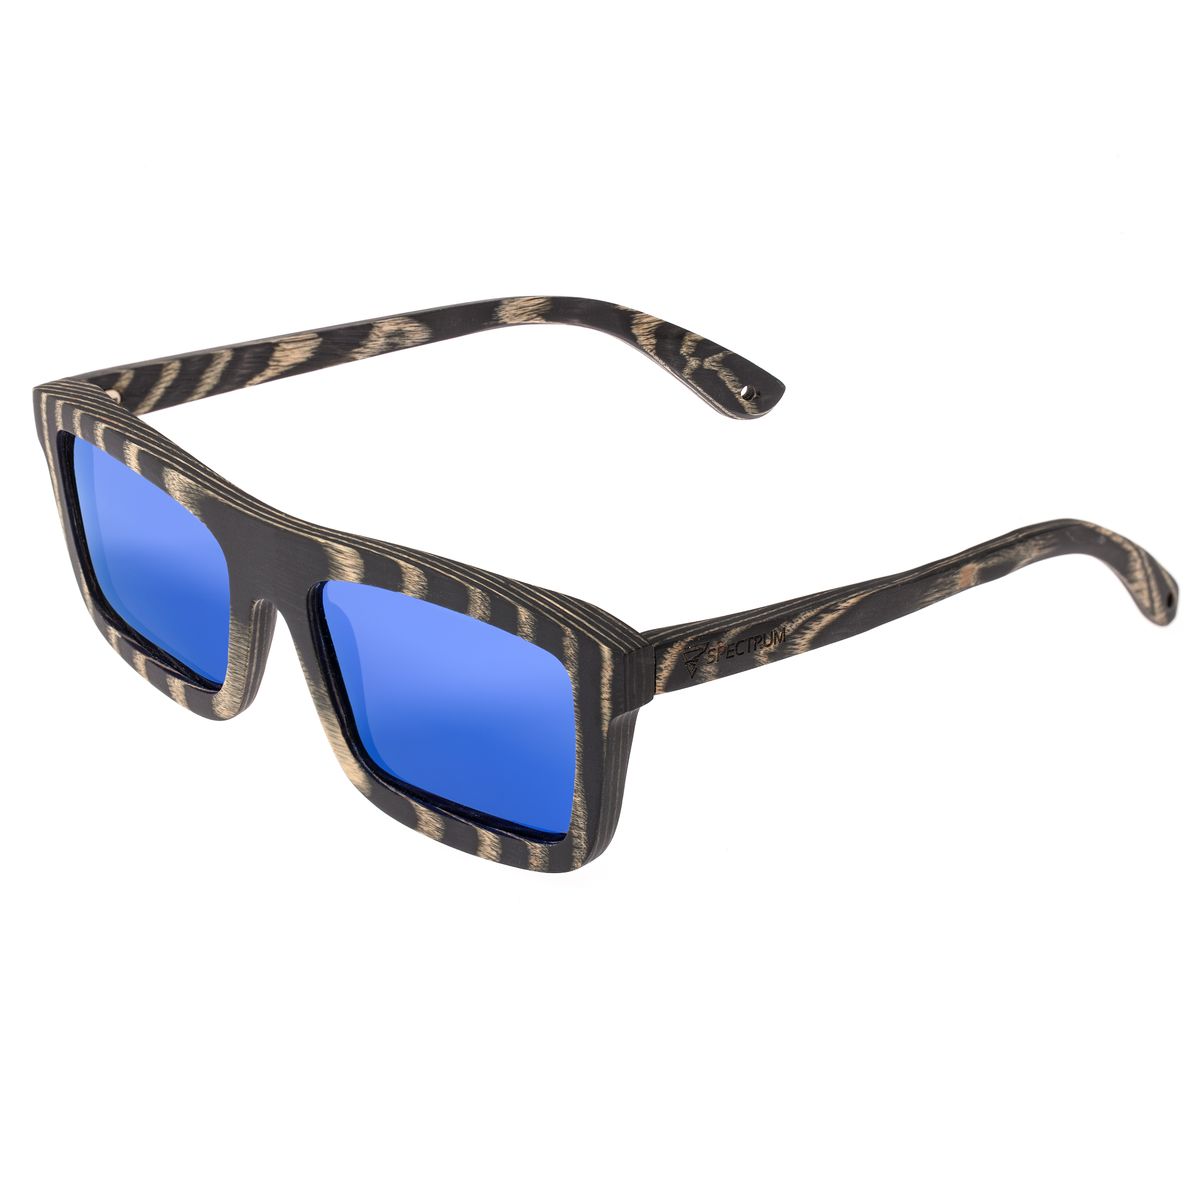 Photos - Sunglasses Spectrum Polarized Wooden  - Ward - Black Stripe/Blue S 